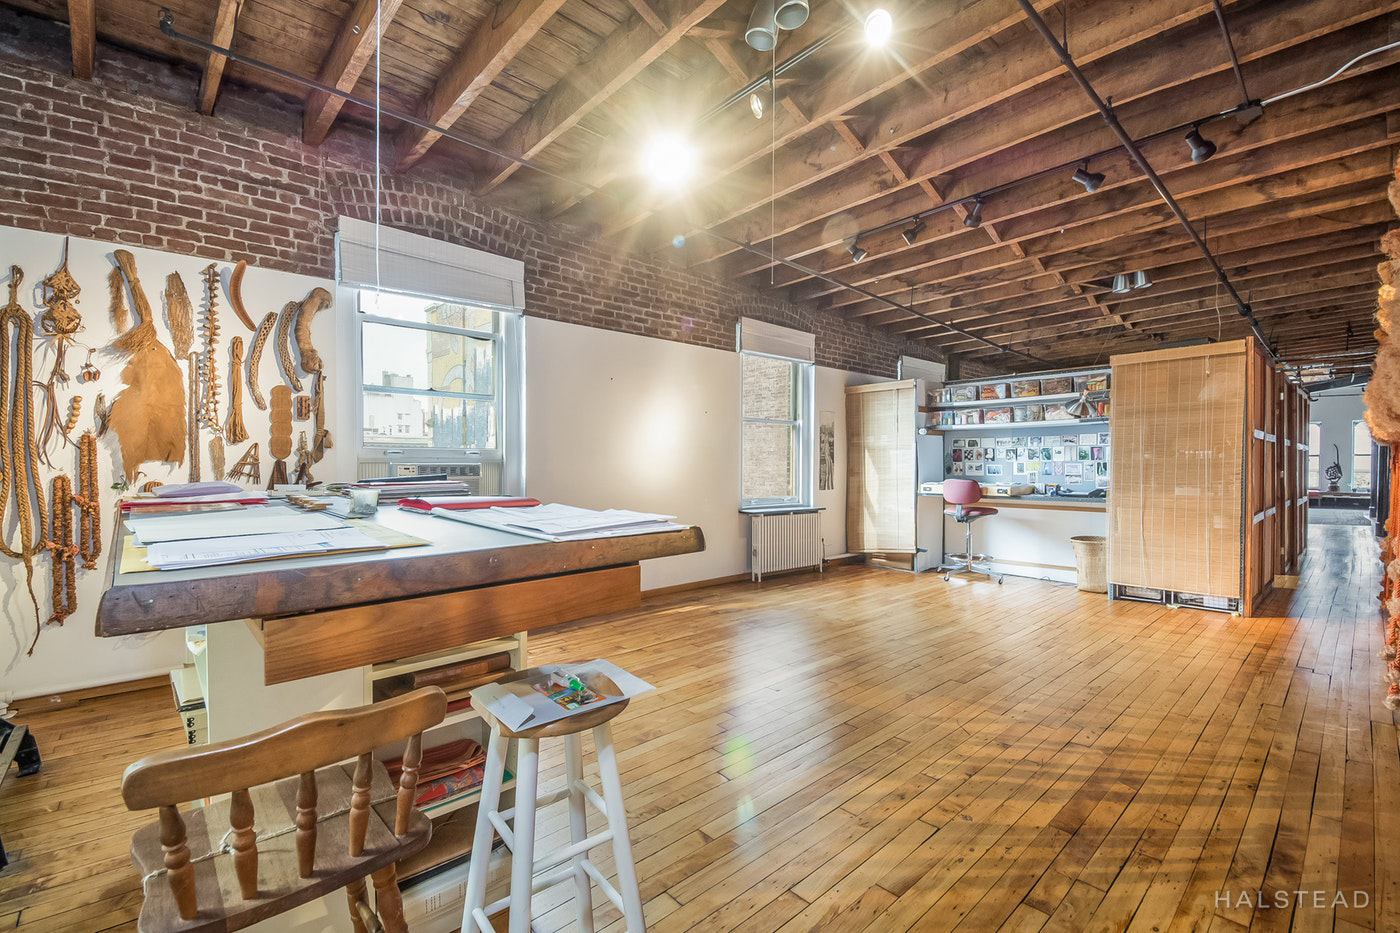 A 3,000 sq ft artist’s loft in Manhattan lists for $4m